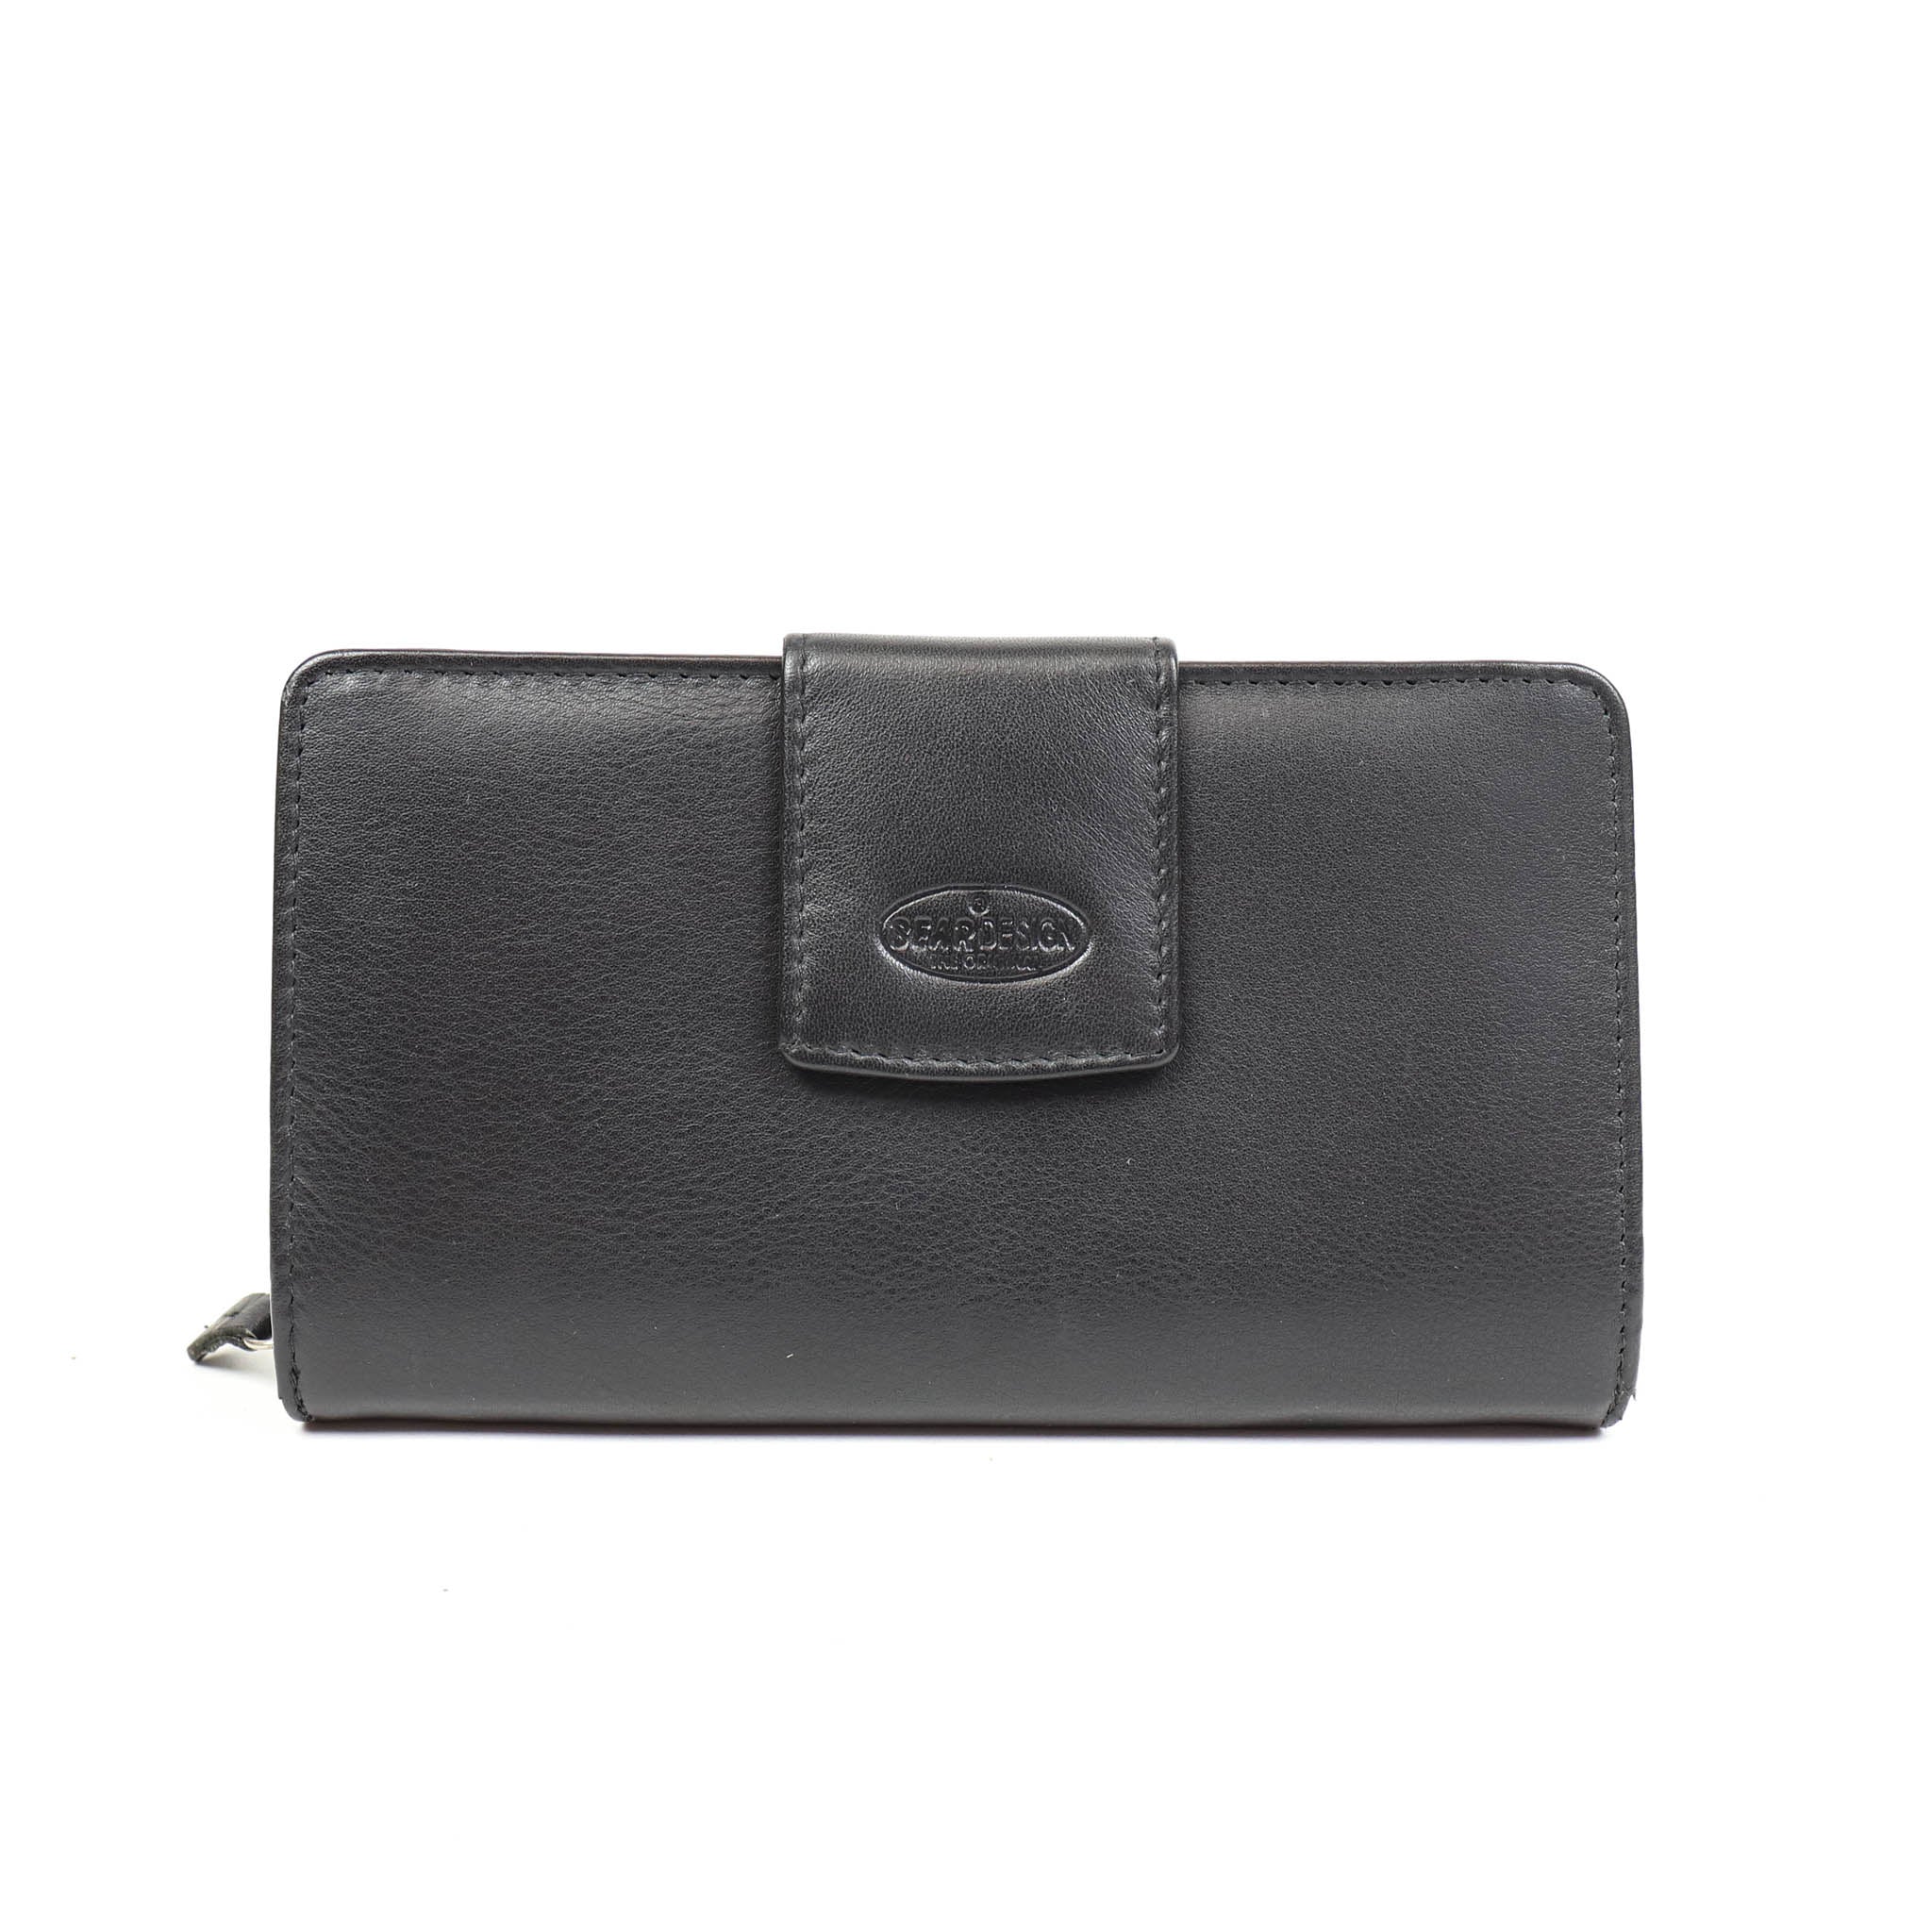 Zipper wallet 'Amy' black - FR 2881